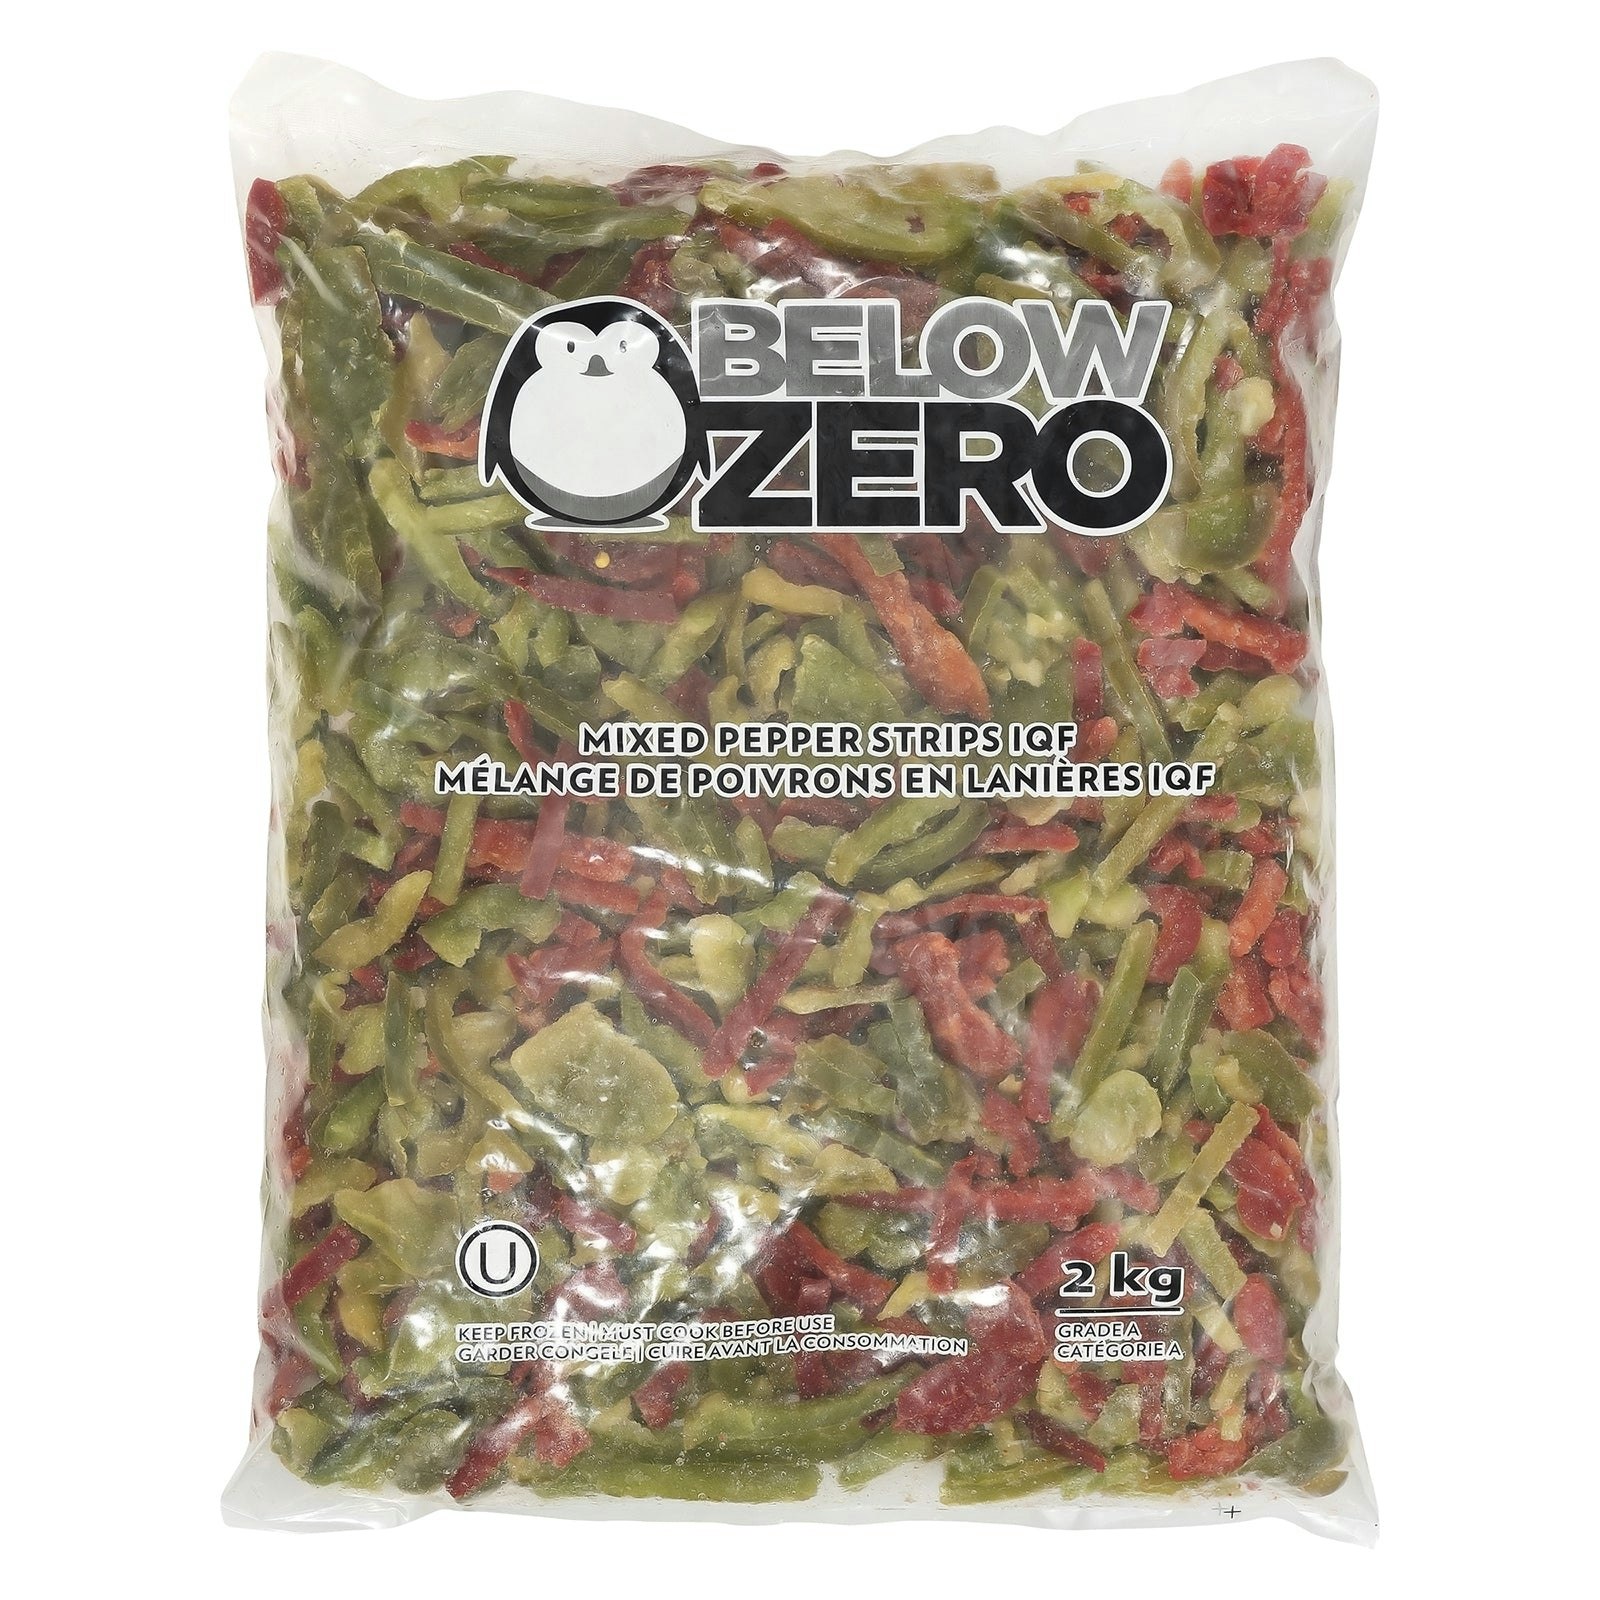 BELOW ZERO Mixed pepper strips